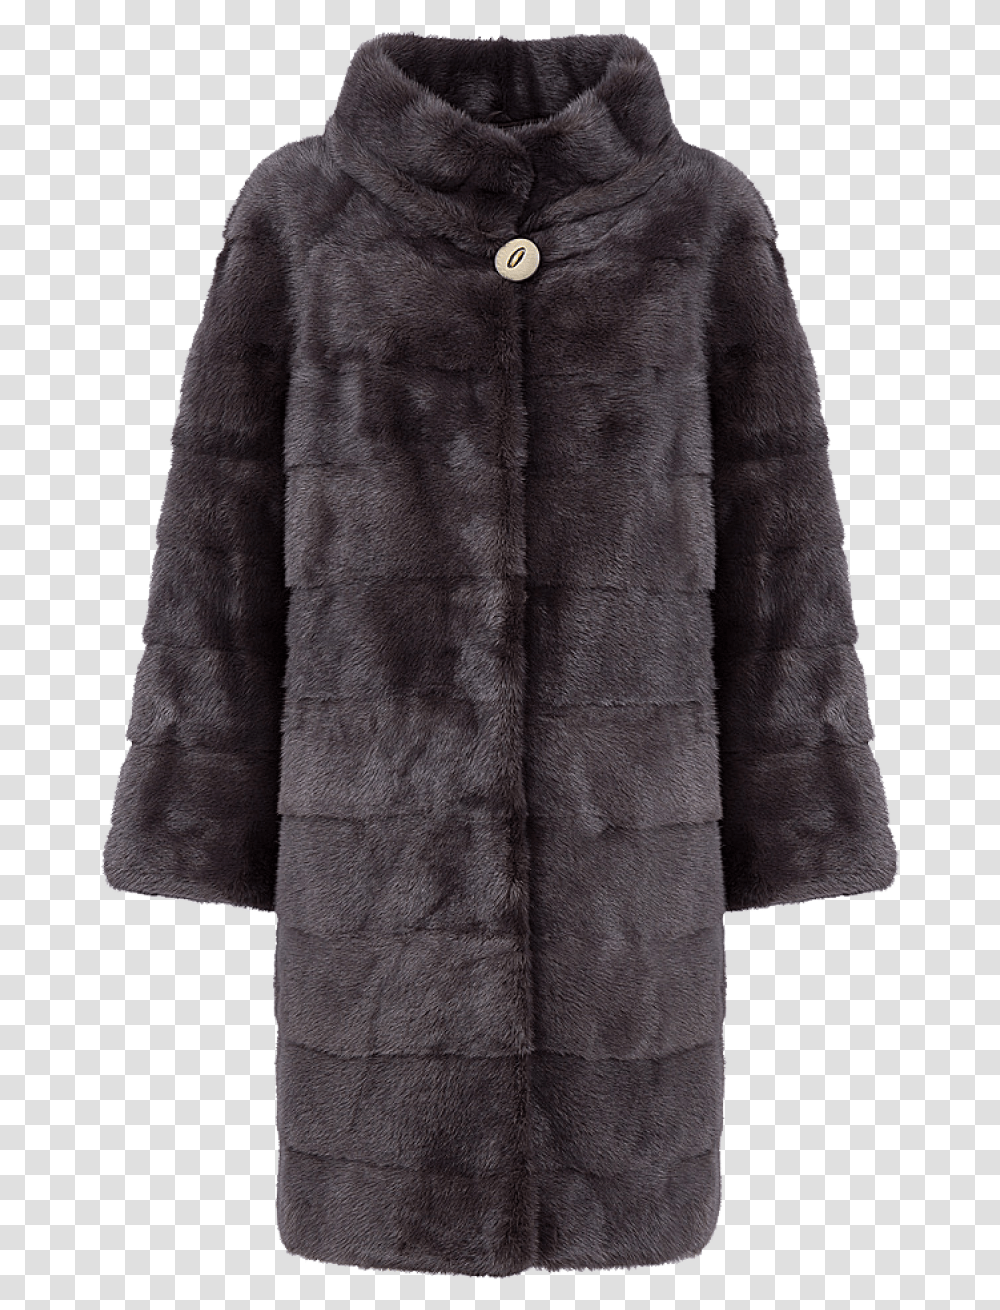 Broadtail Lamb Jacket With Sable Trim Image Skachat Kartinku Shuba, Apparel, Coat, Overcoat Transparent Png